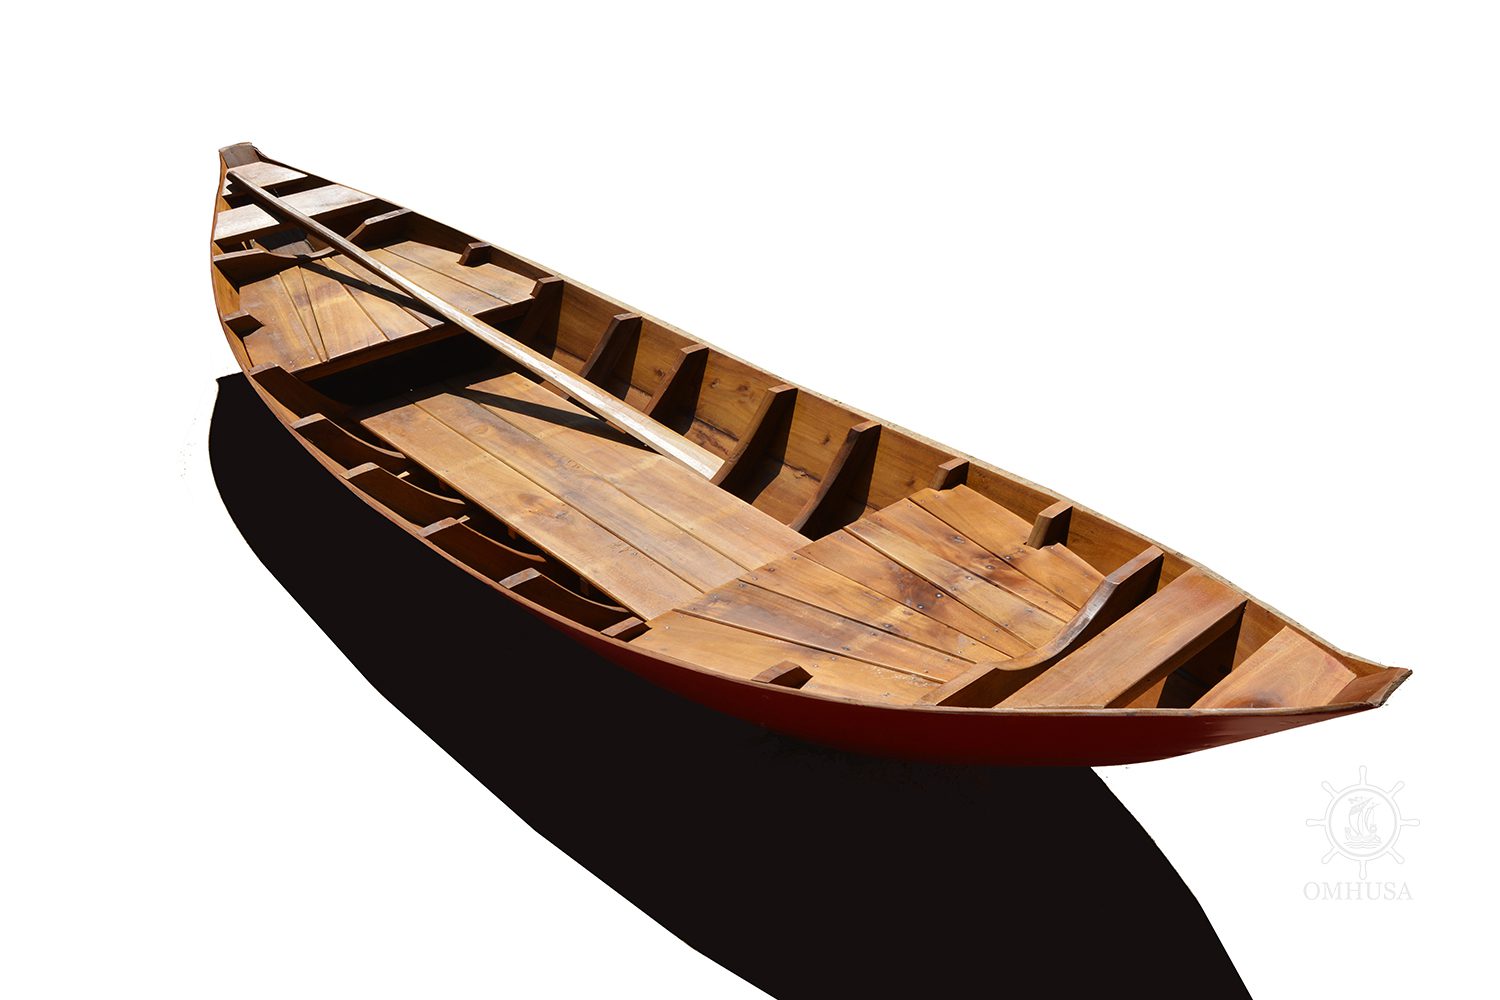 Buy Chinese Sampan Boat, Display only boat - Wooden Boat USA